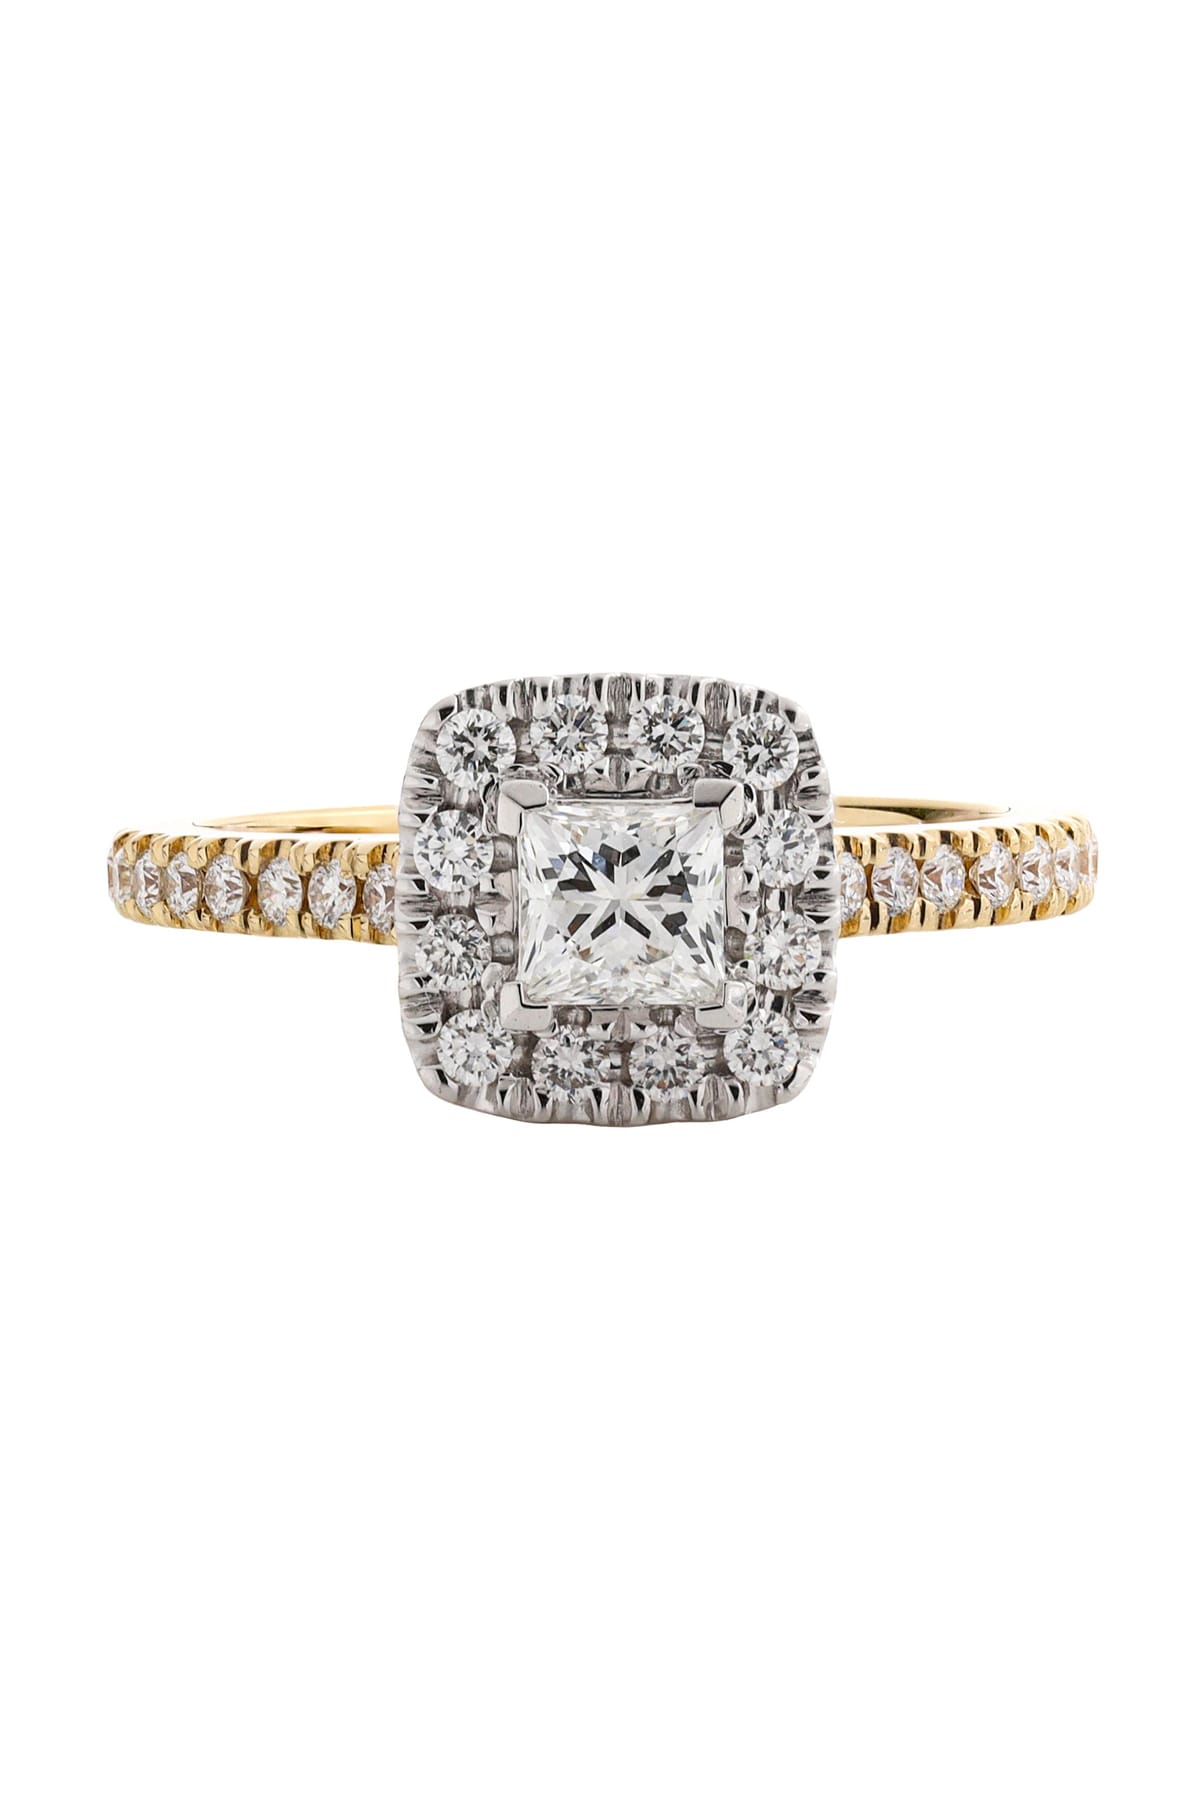 18 carat Gold Princess Diamond Halo Engagement Ring available at LeGassick Diamonds and Jewellery Gold Coast, Australia